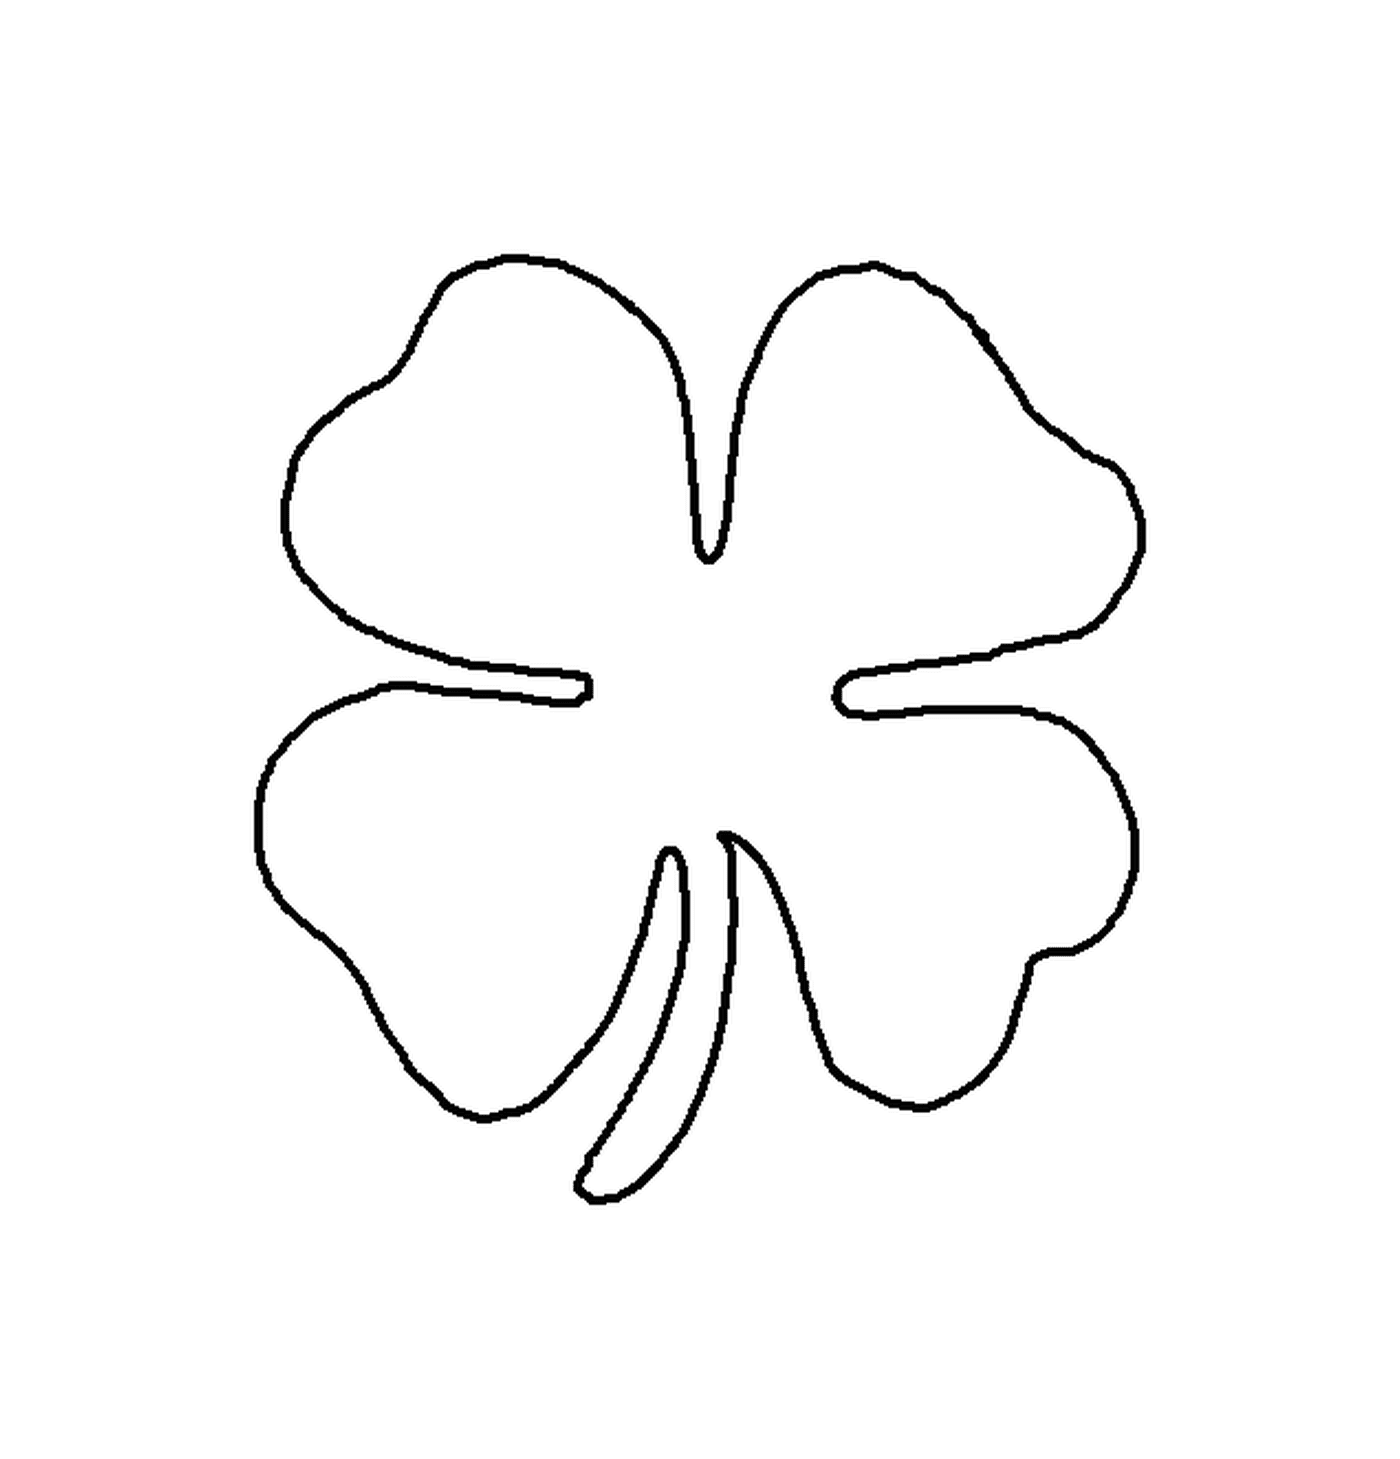  Shamrock, simbolo dell'Irlanda per San Patrizio 